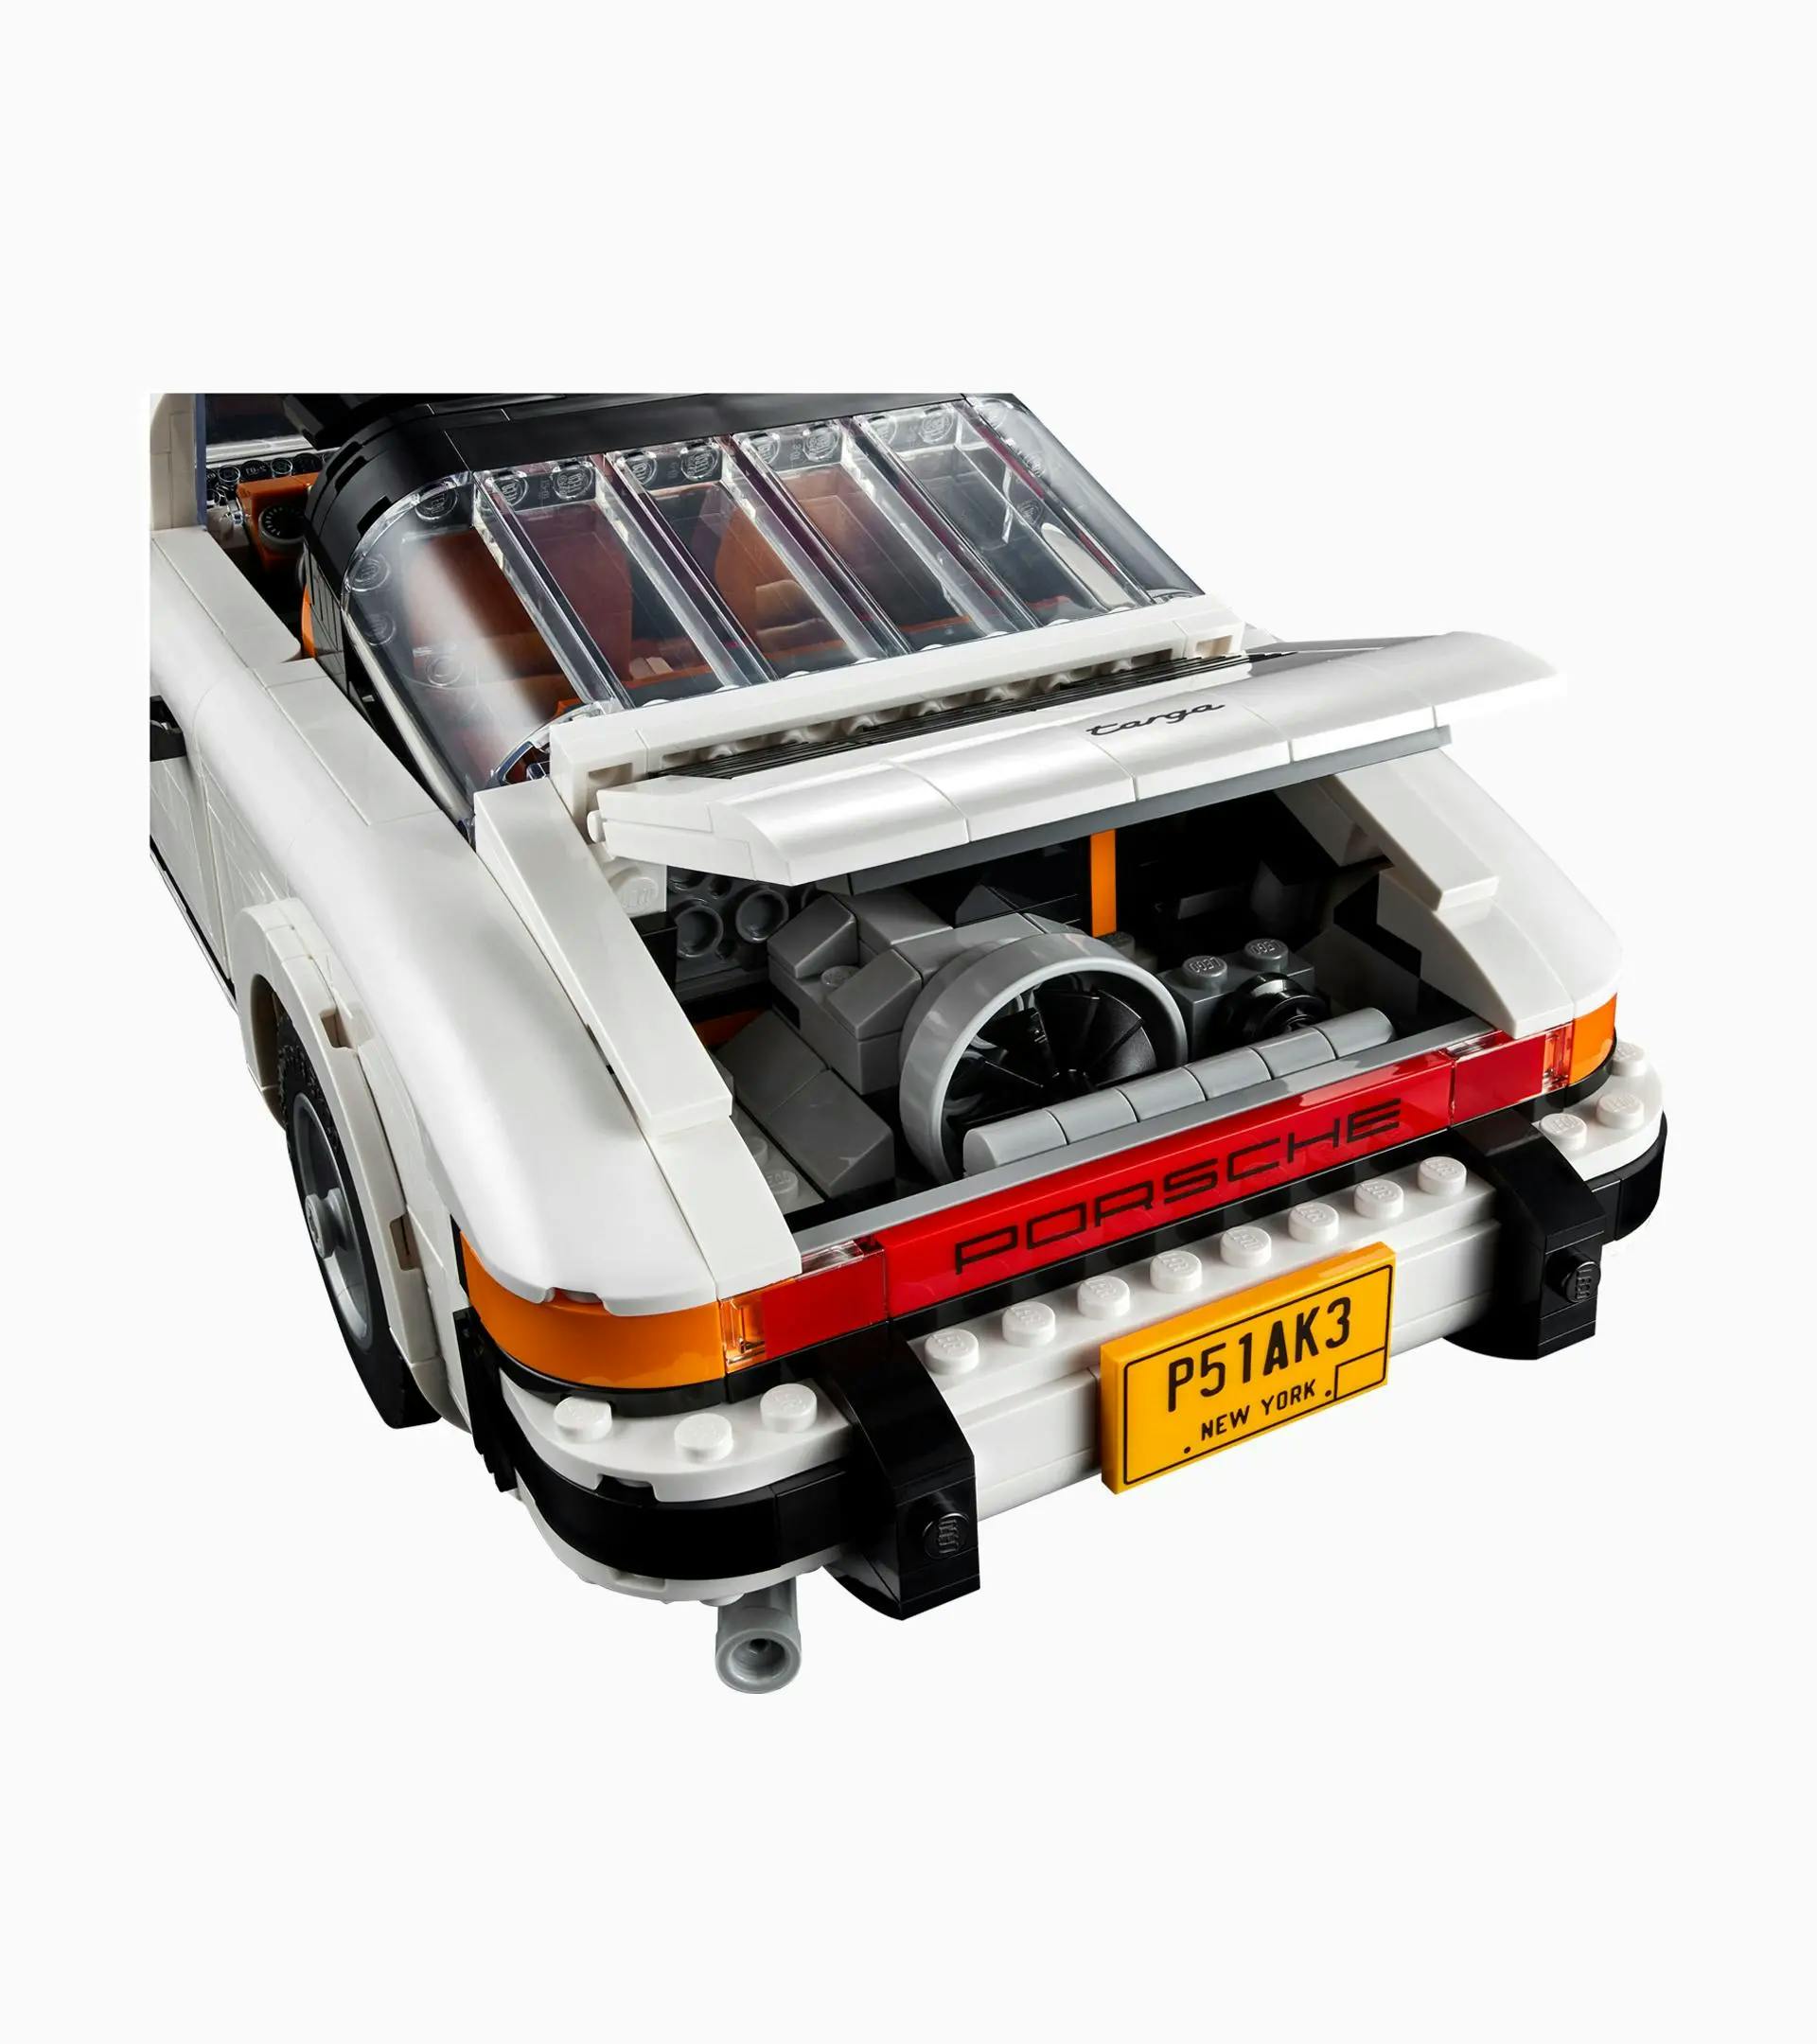 Set de LEGO® Creator de 911 Turbo y 911 Targa thumbnail 3